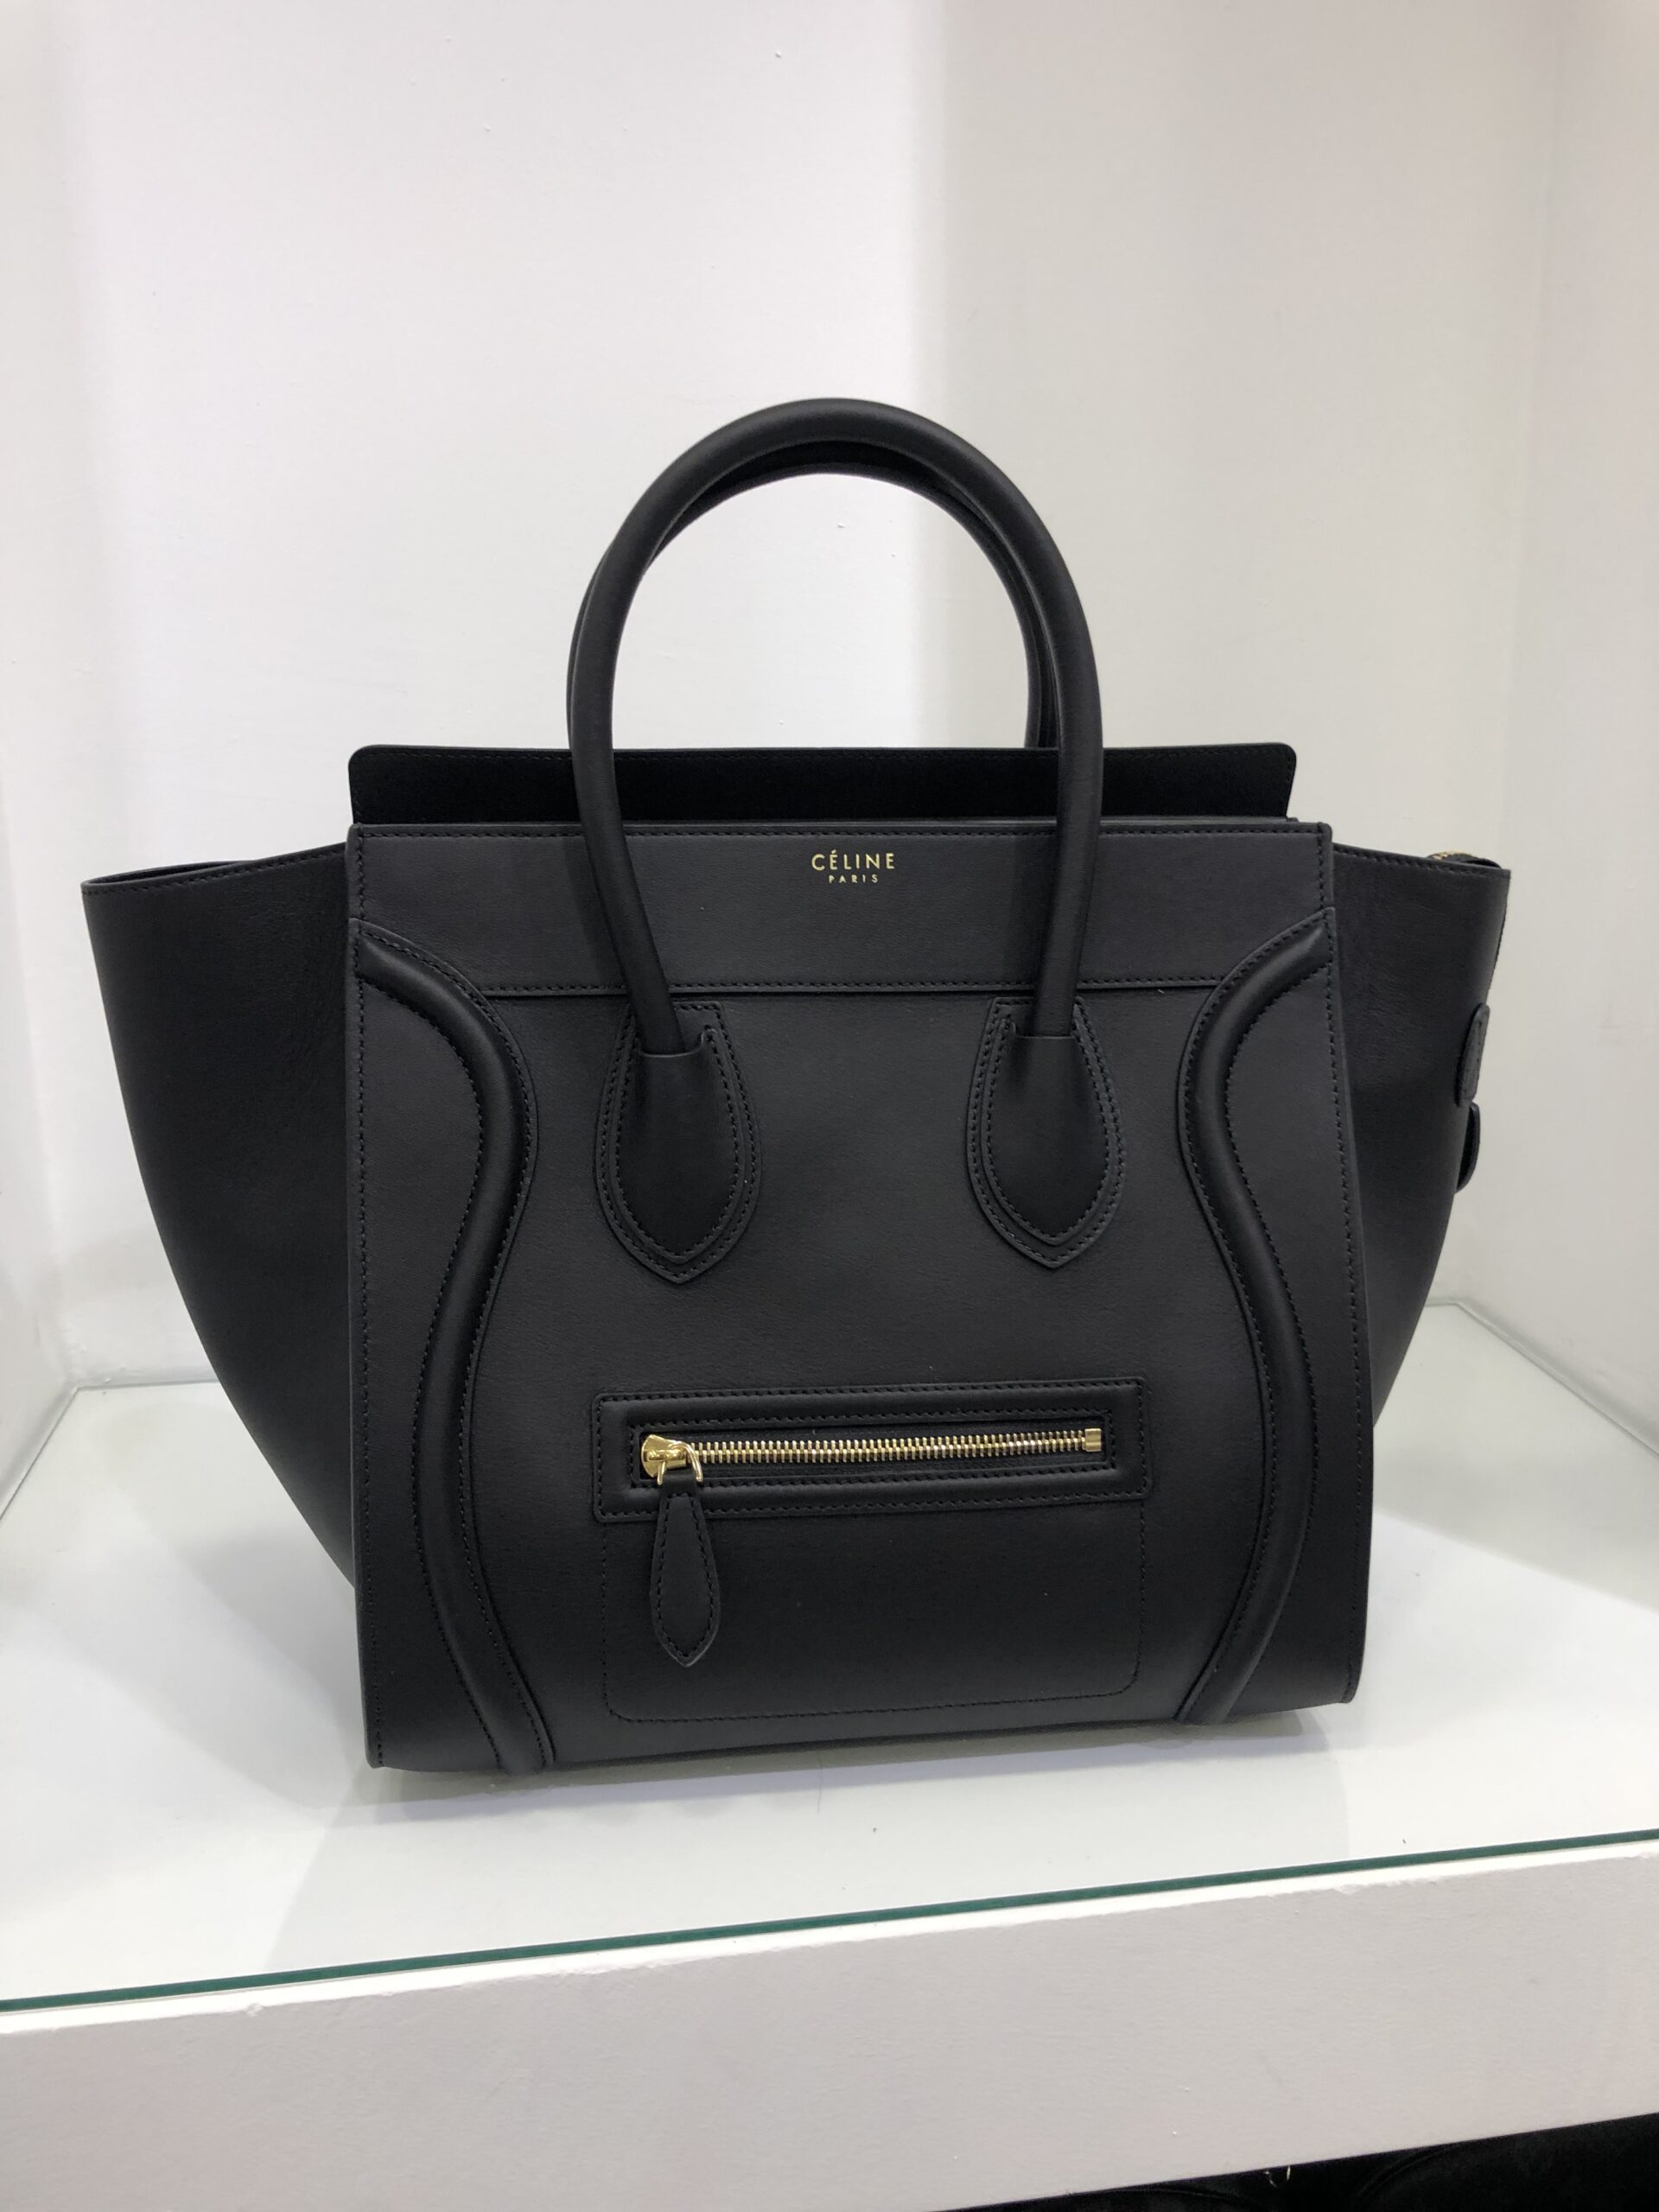 Celine/ luggage tote Bag Rn Atelier Luxury Clothing, Bags, Accessories